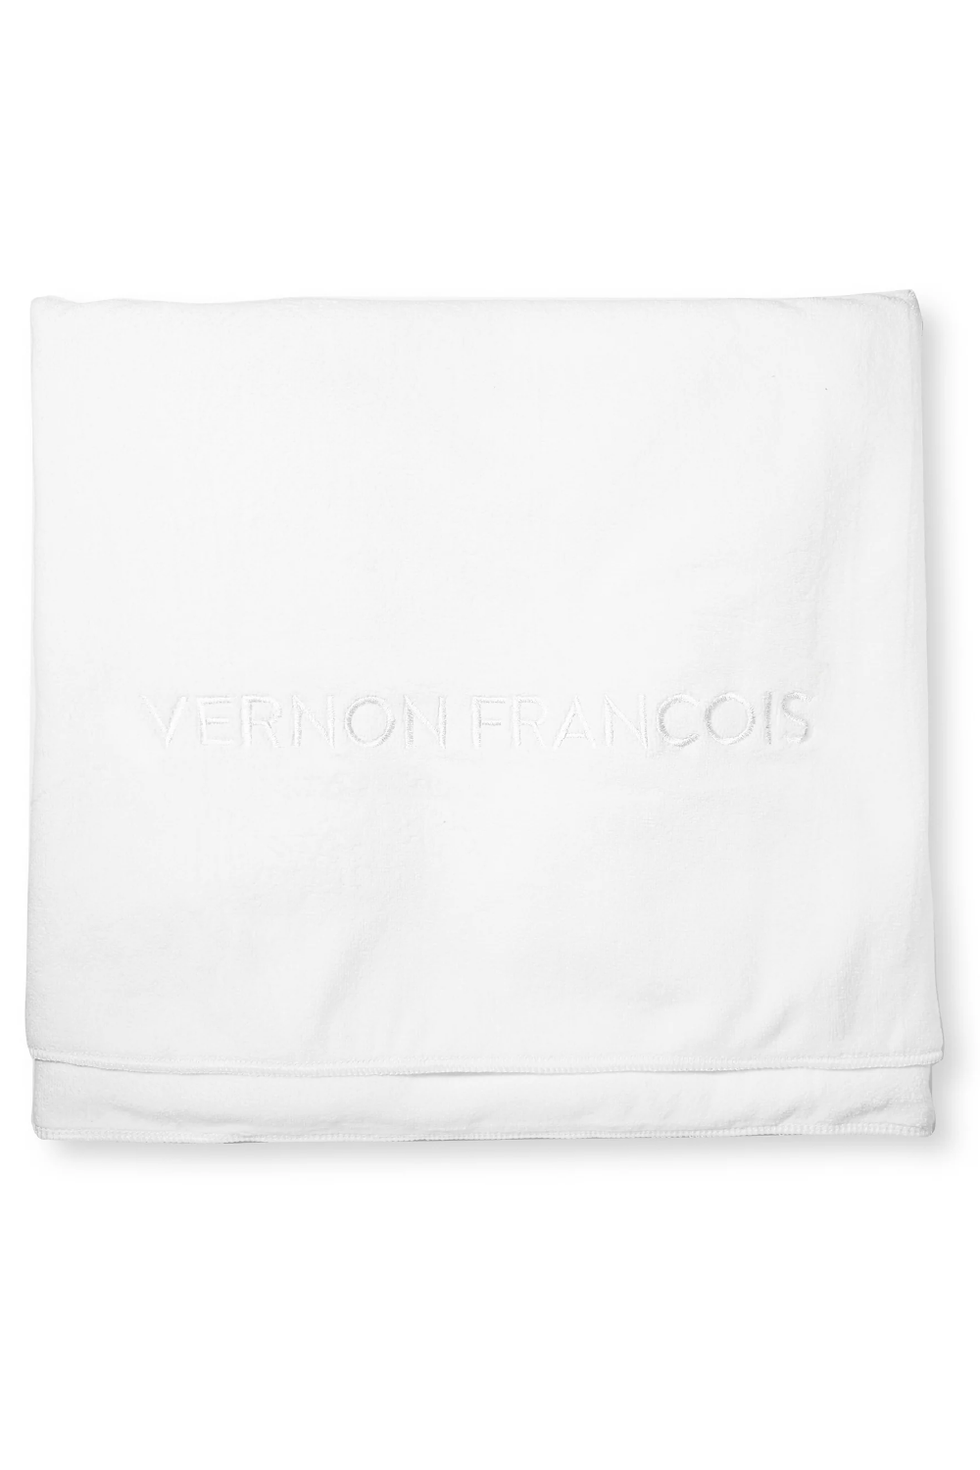 Vernon Francois Microfibre Towel